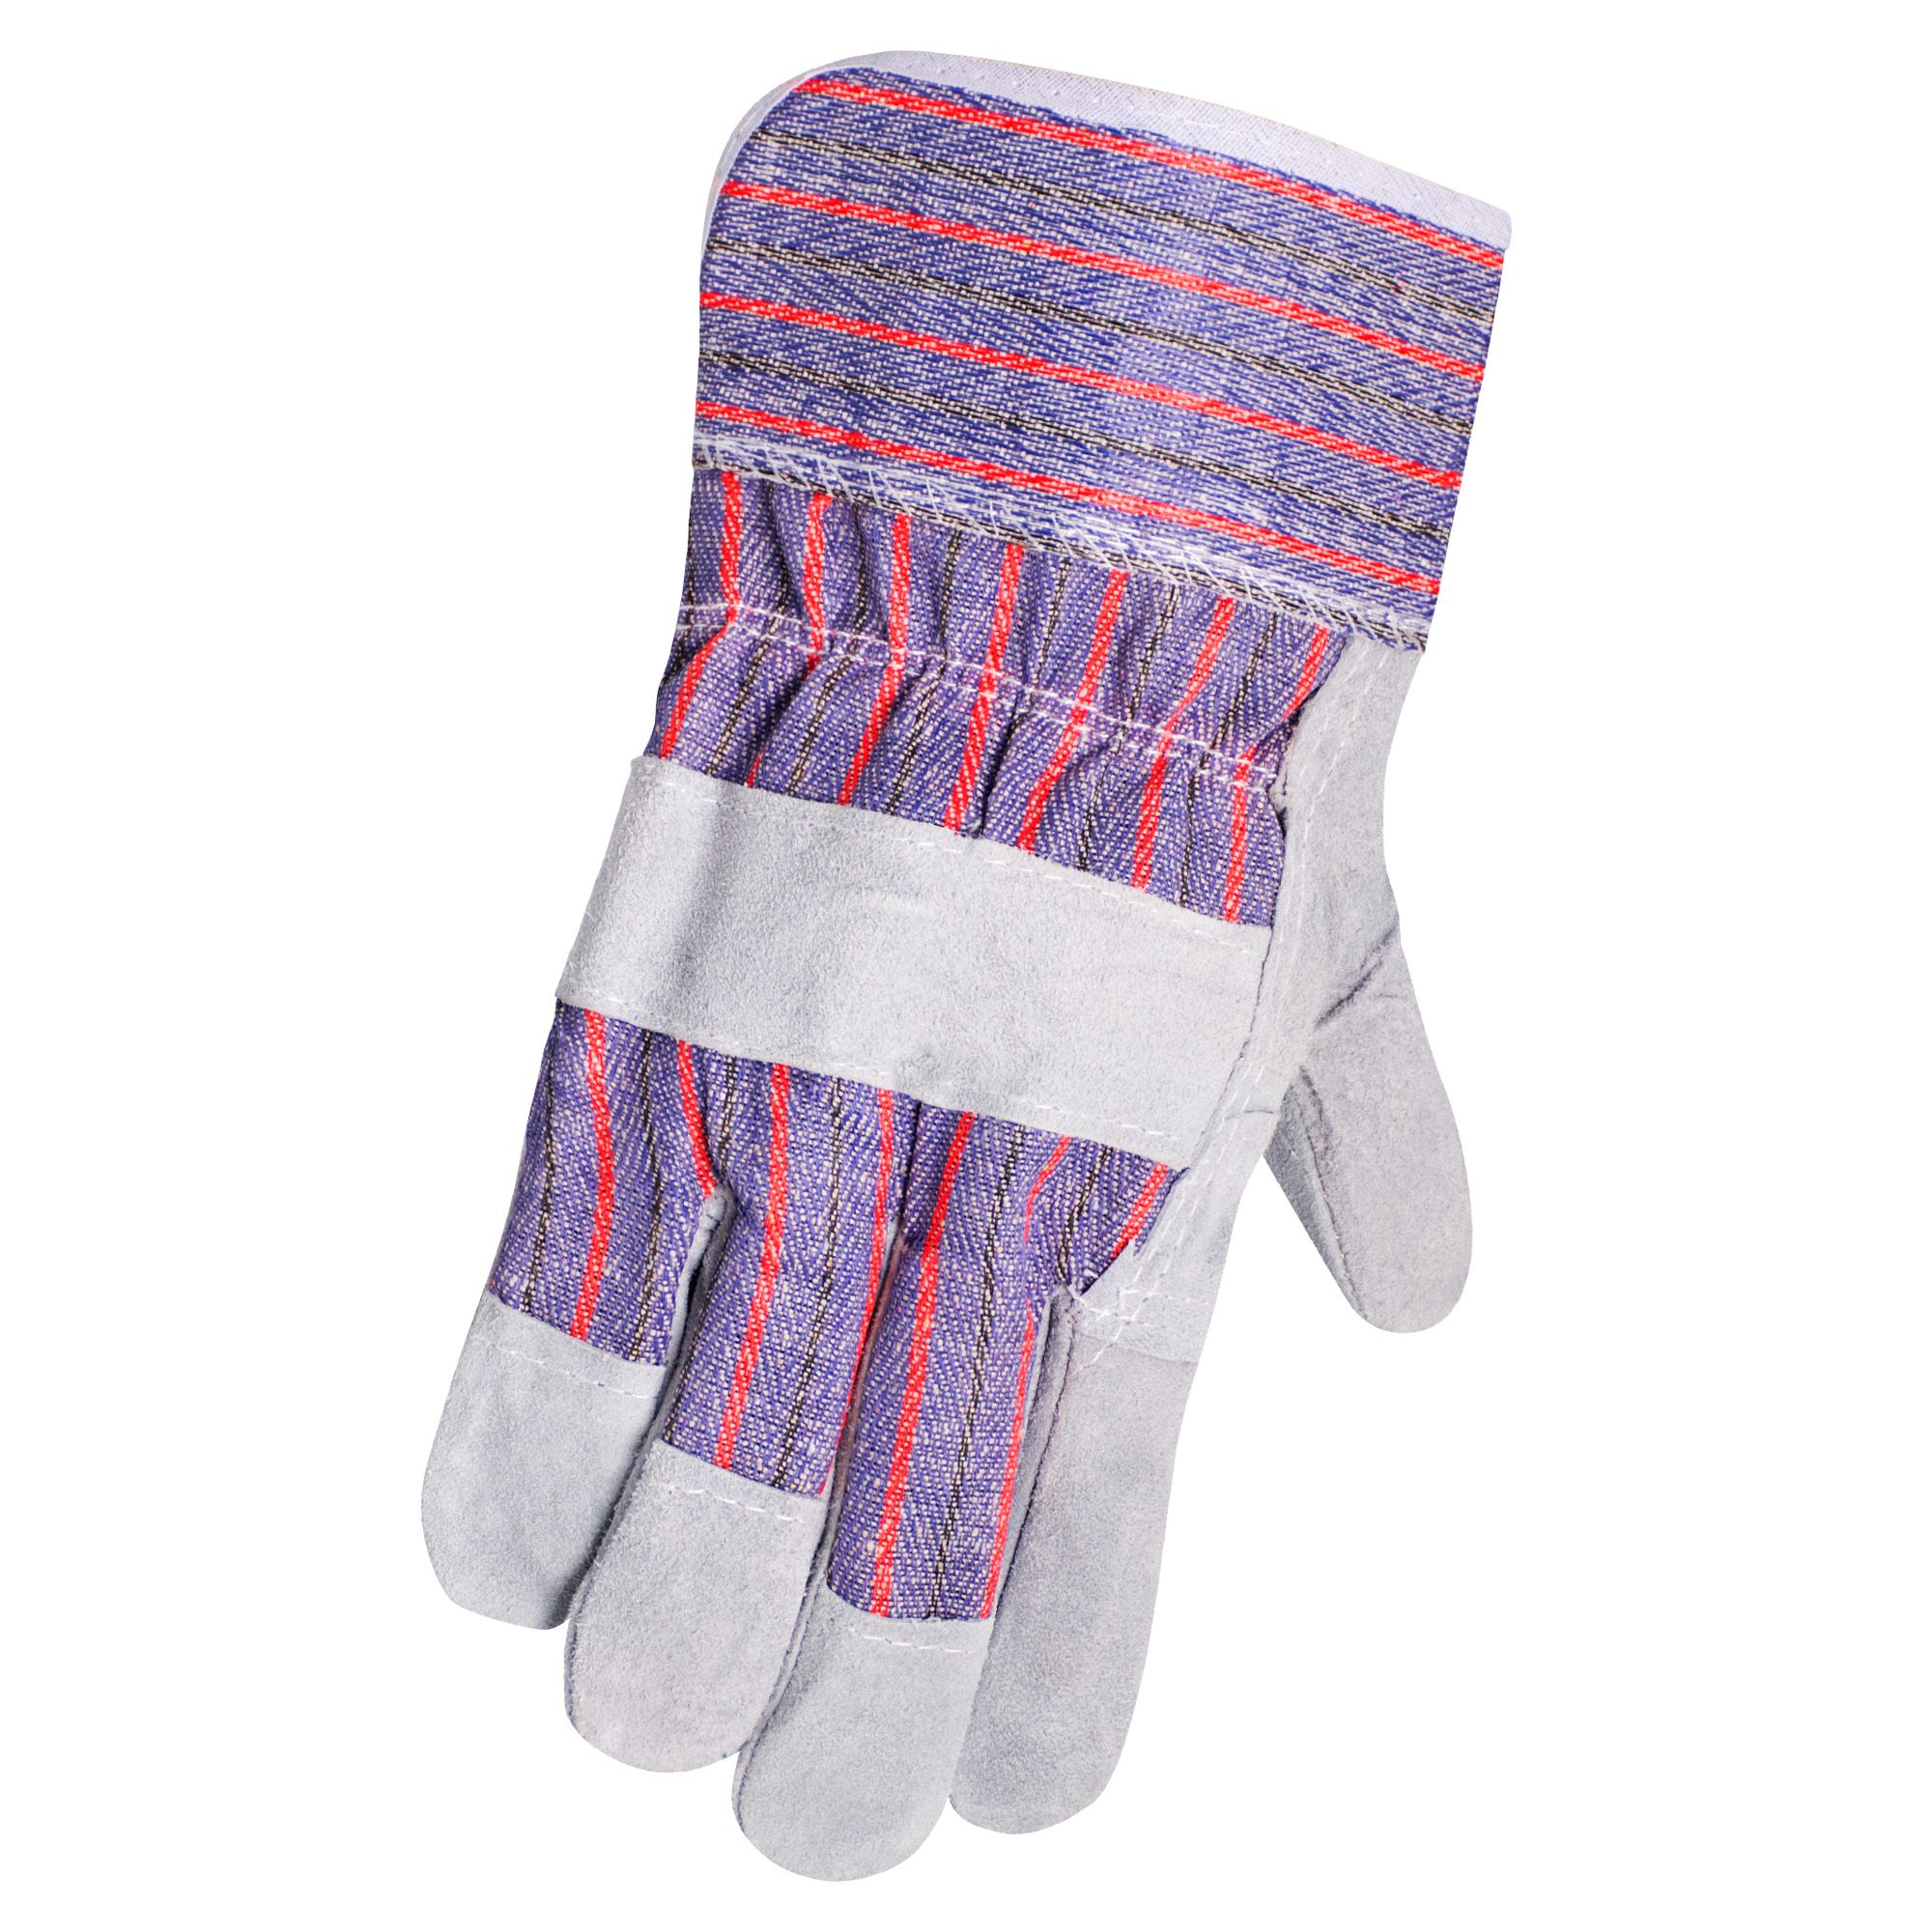 Horizon Cotton Back Economy Cowsplit Palm Leather Work Gloves